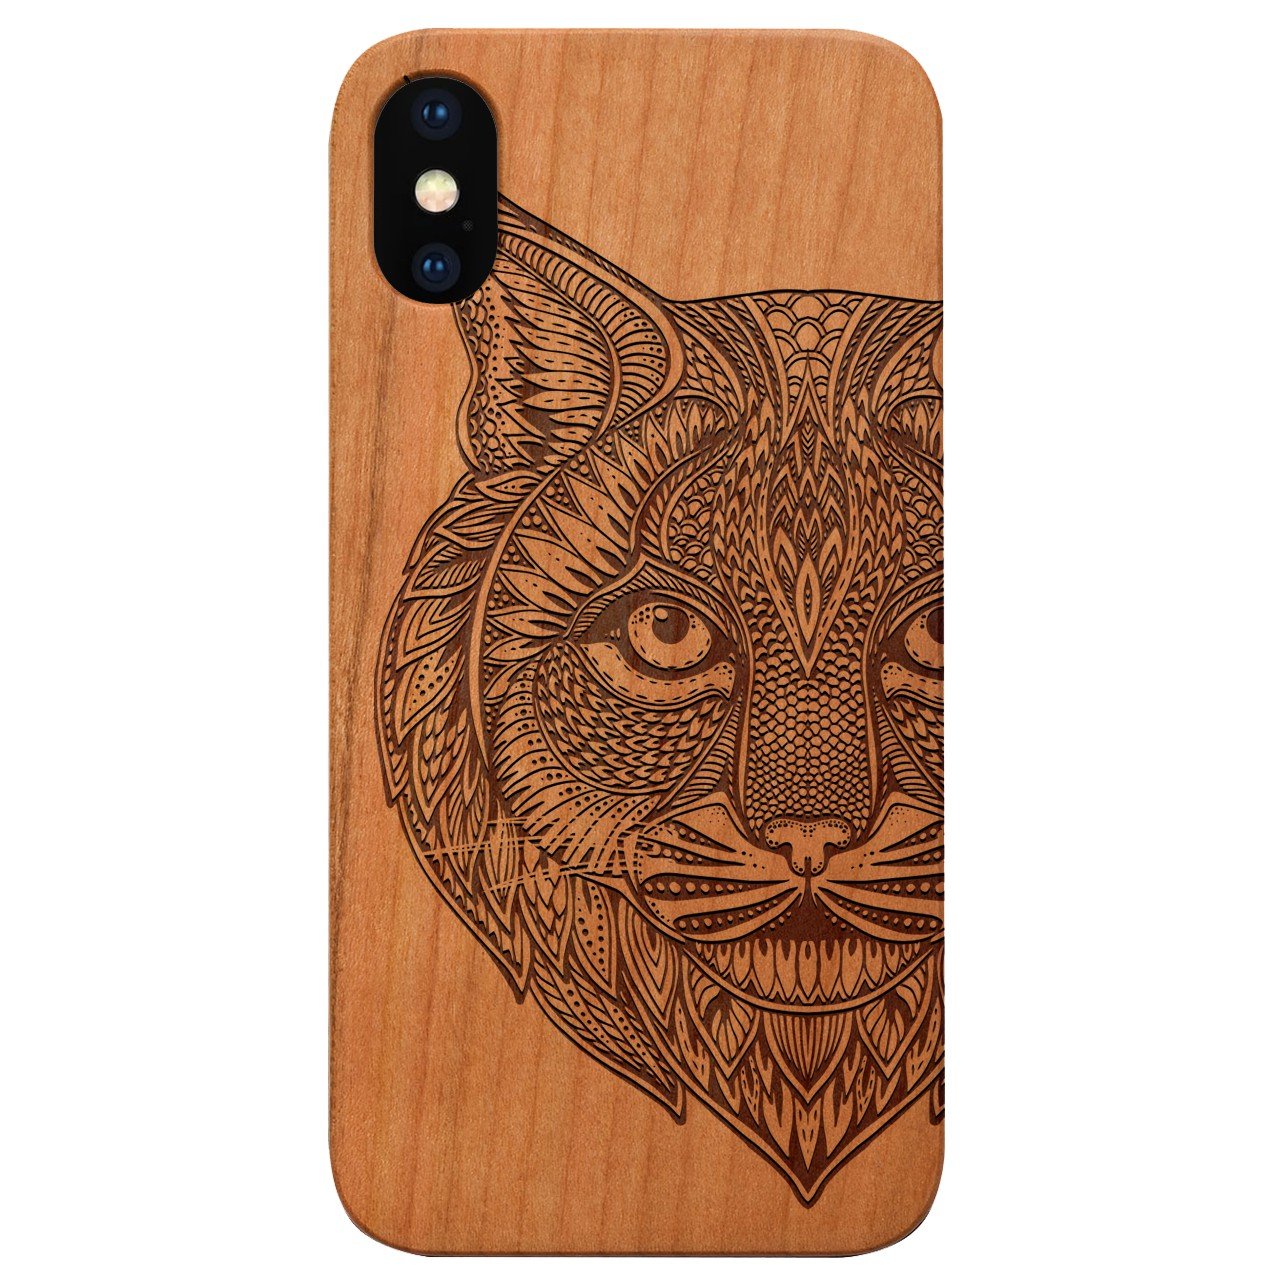 Bobcat - Engraved - Wooden Phone Case